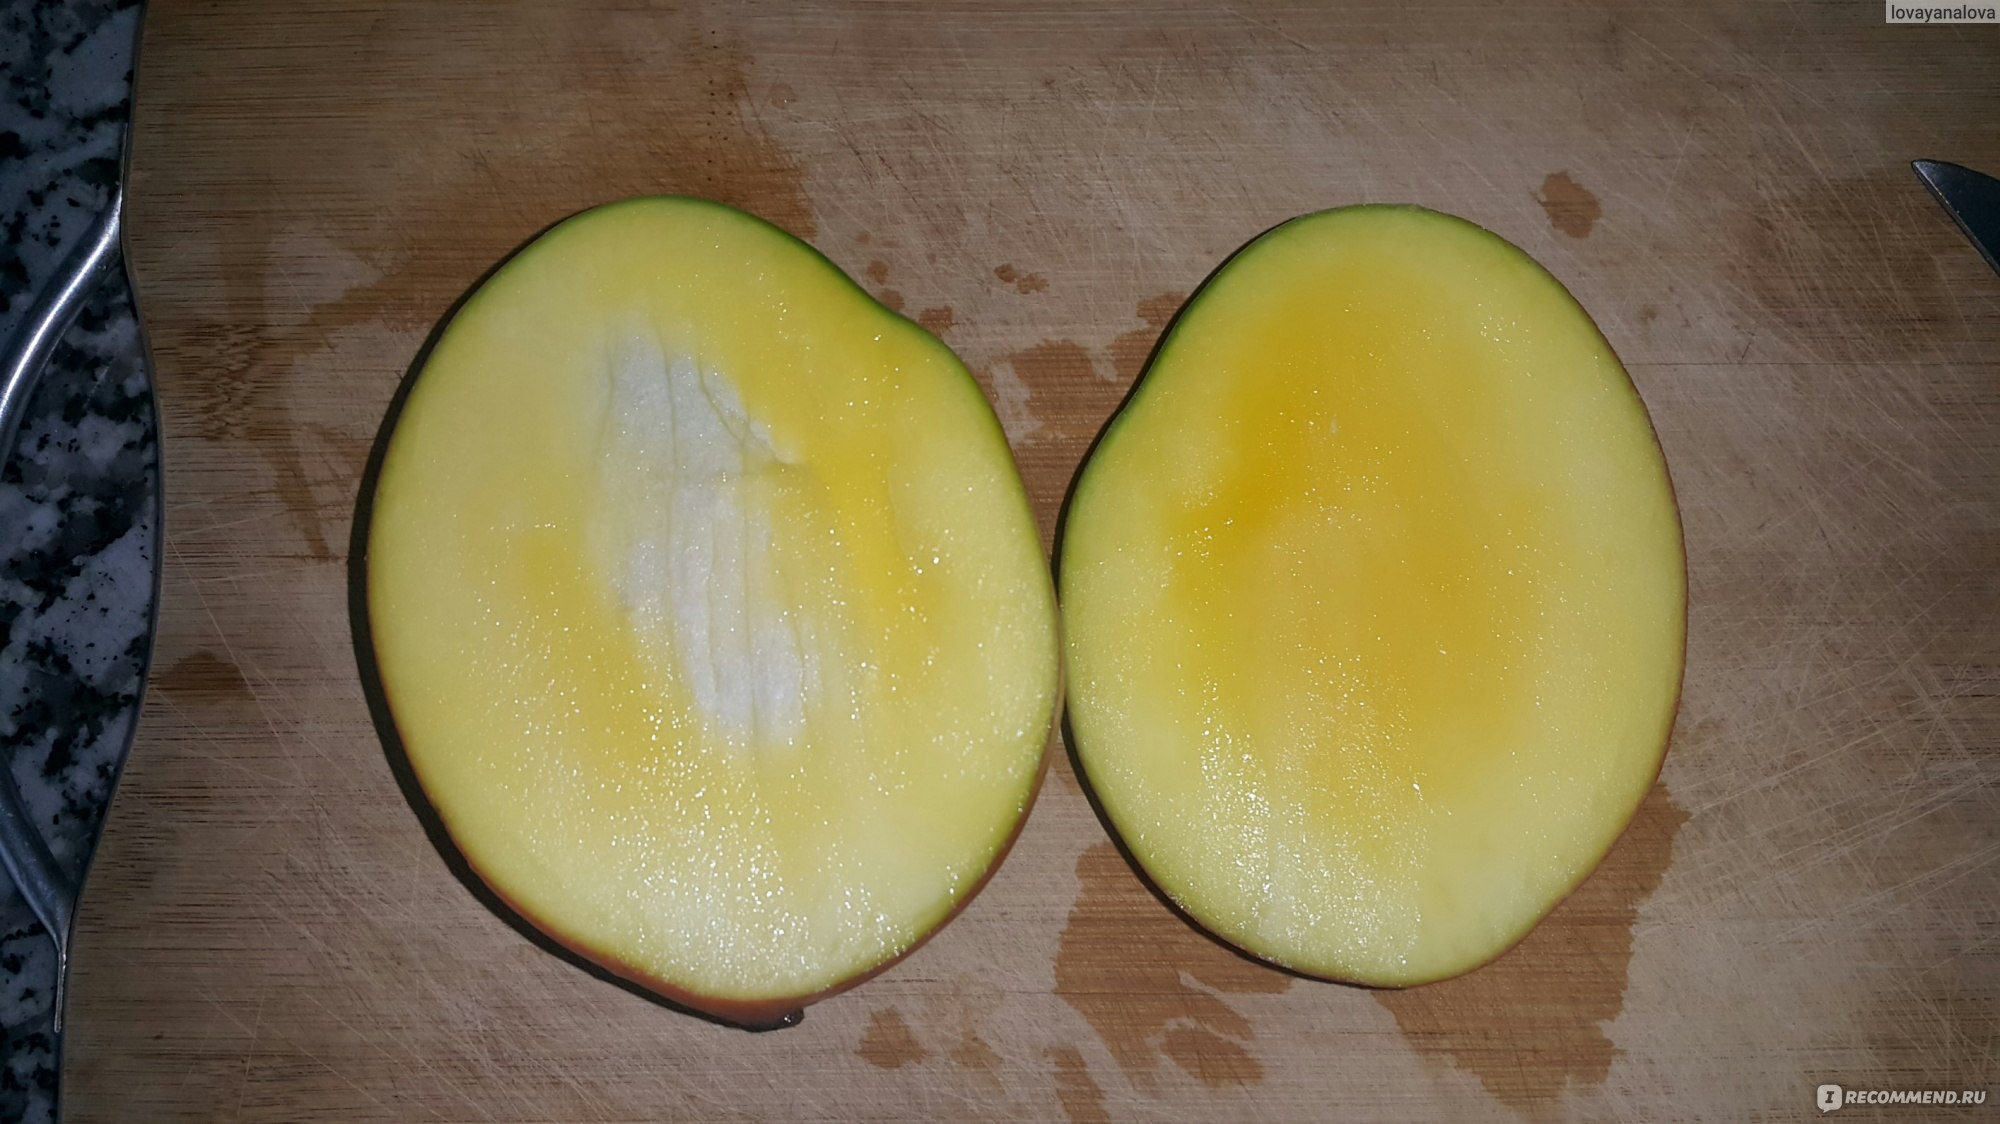 Фото спелого манго в разрезе фото